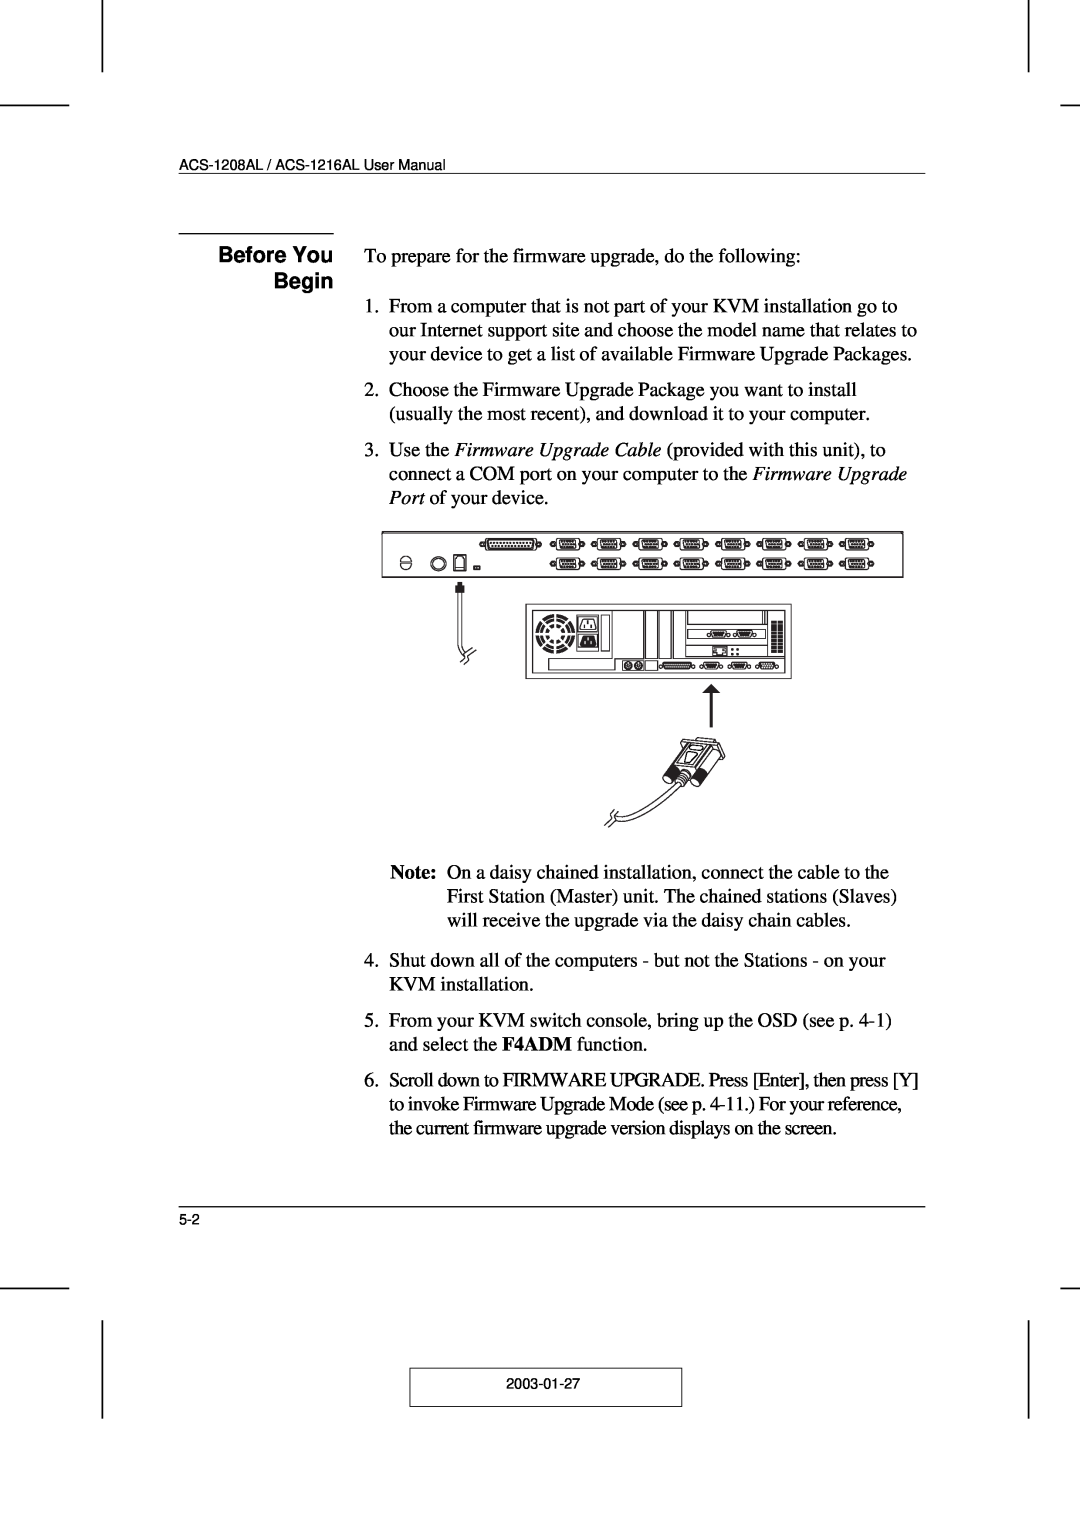 ATEN Technology ACS-1208AL, ACS-1216AL user manual Begin, 2003-01-27 